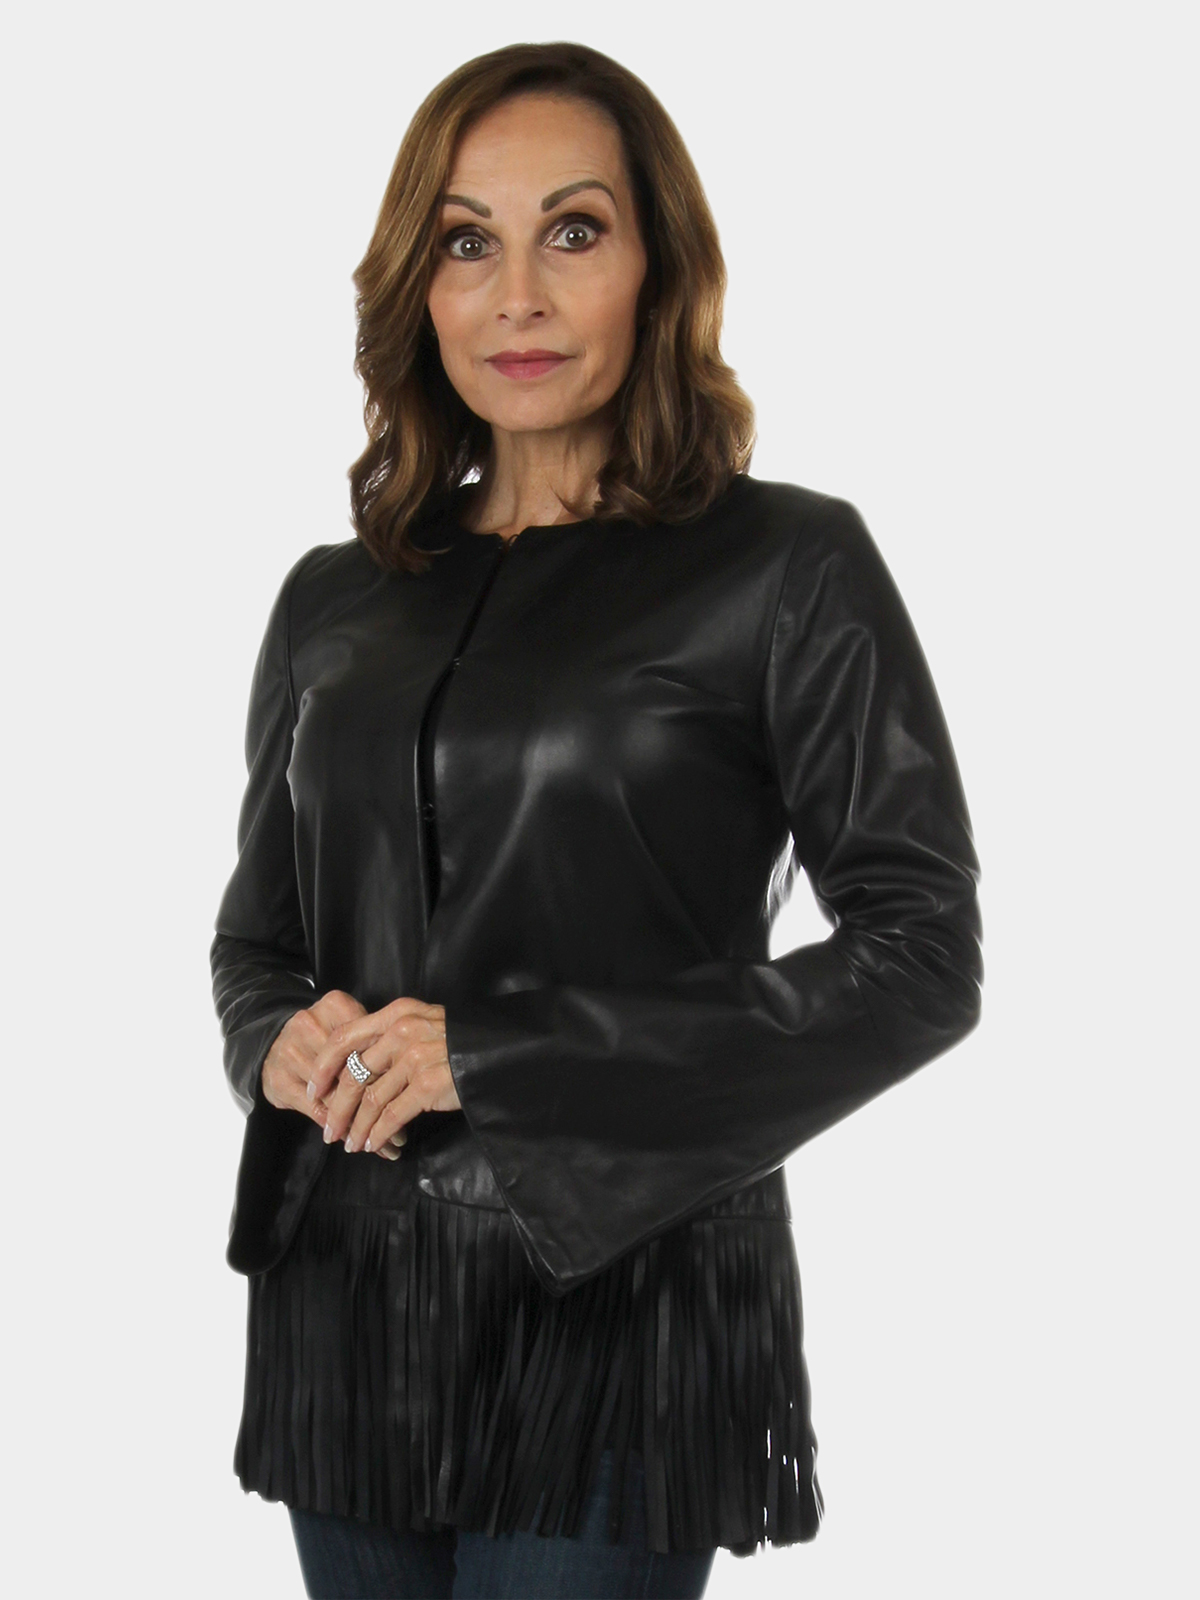 Woman's New Carolyn Rowan Maxwell Black Lamb Leather Jacket